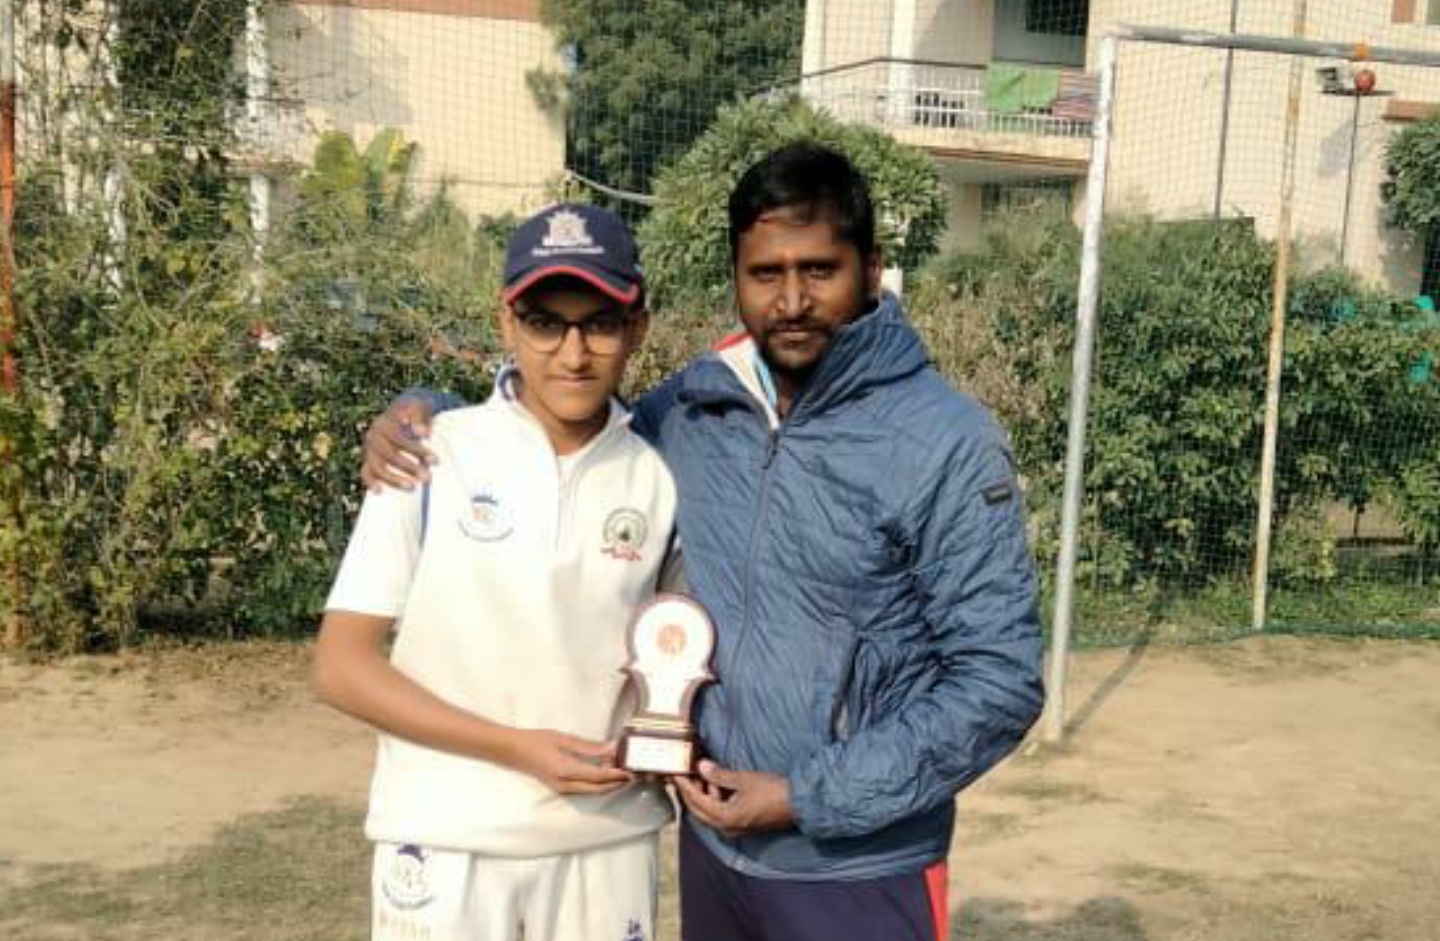 Saransh Jain from Venkateshwar Cricket Academy in Delhi